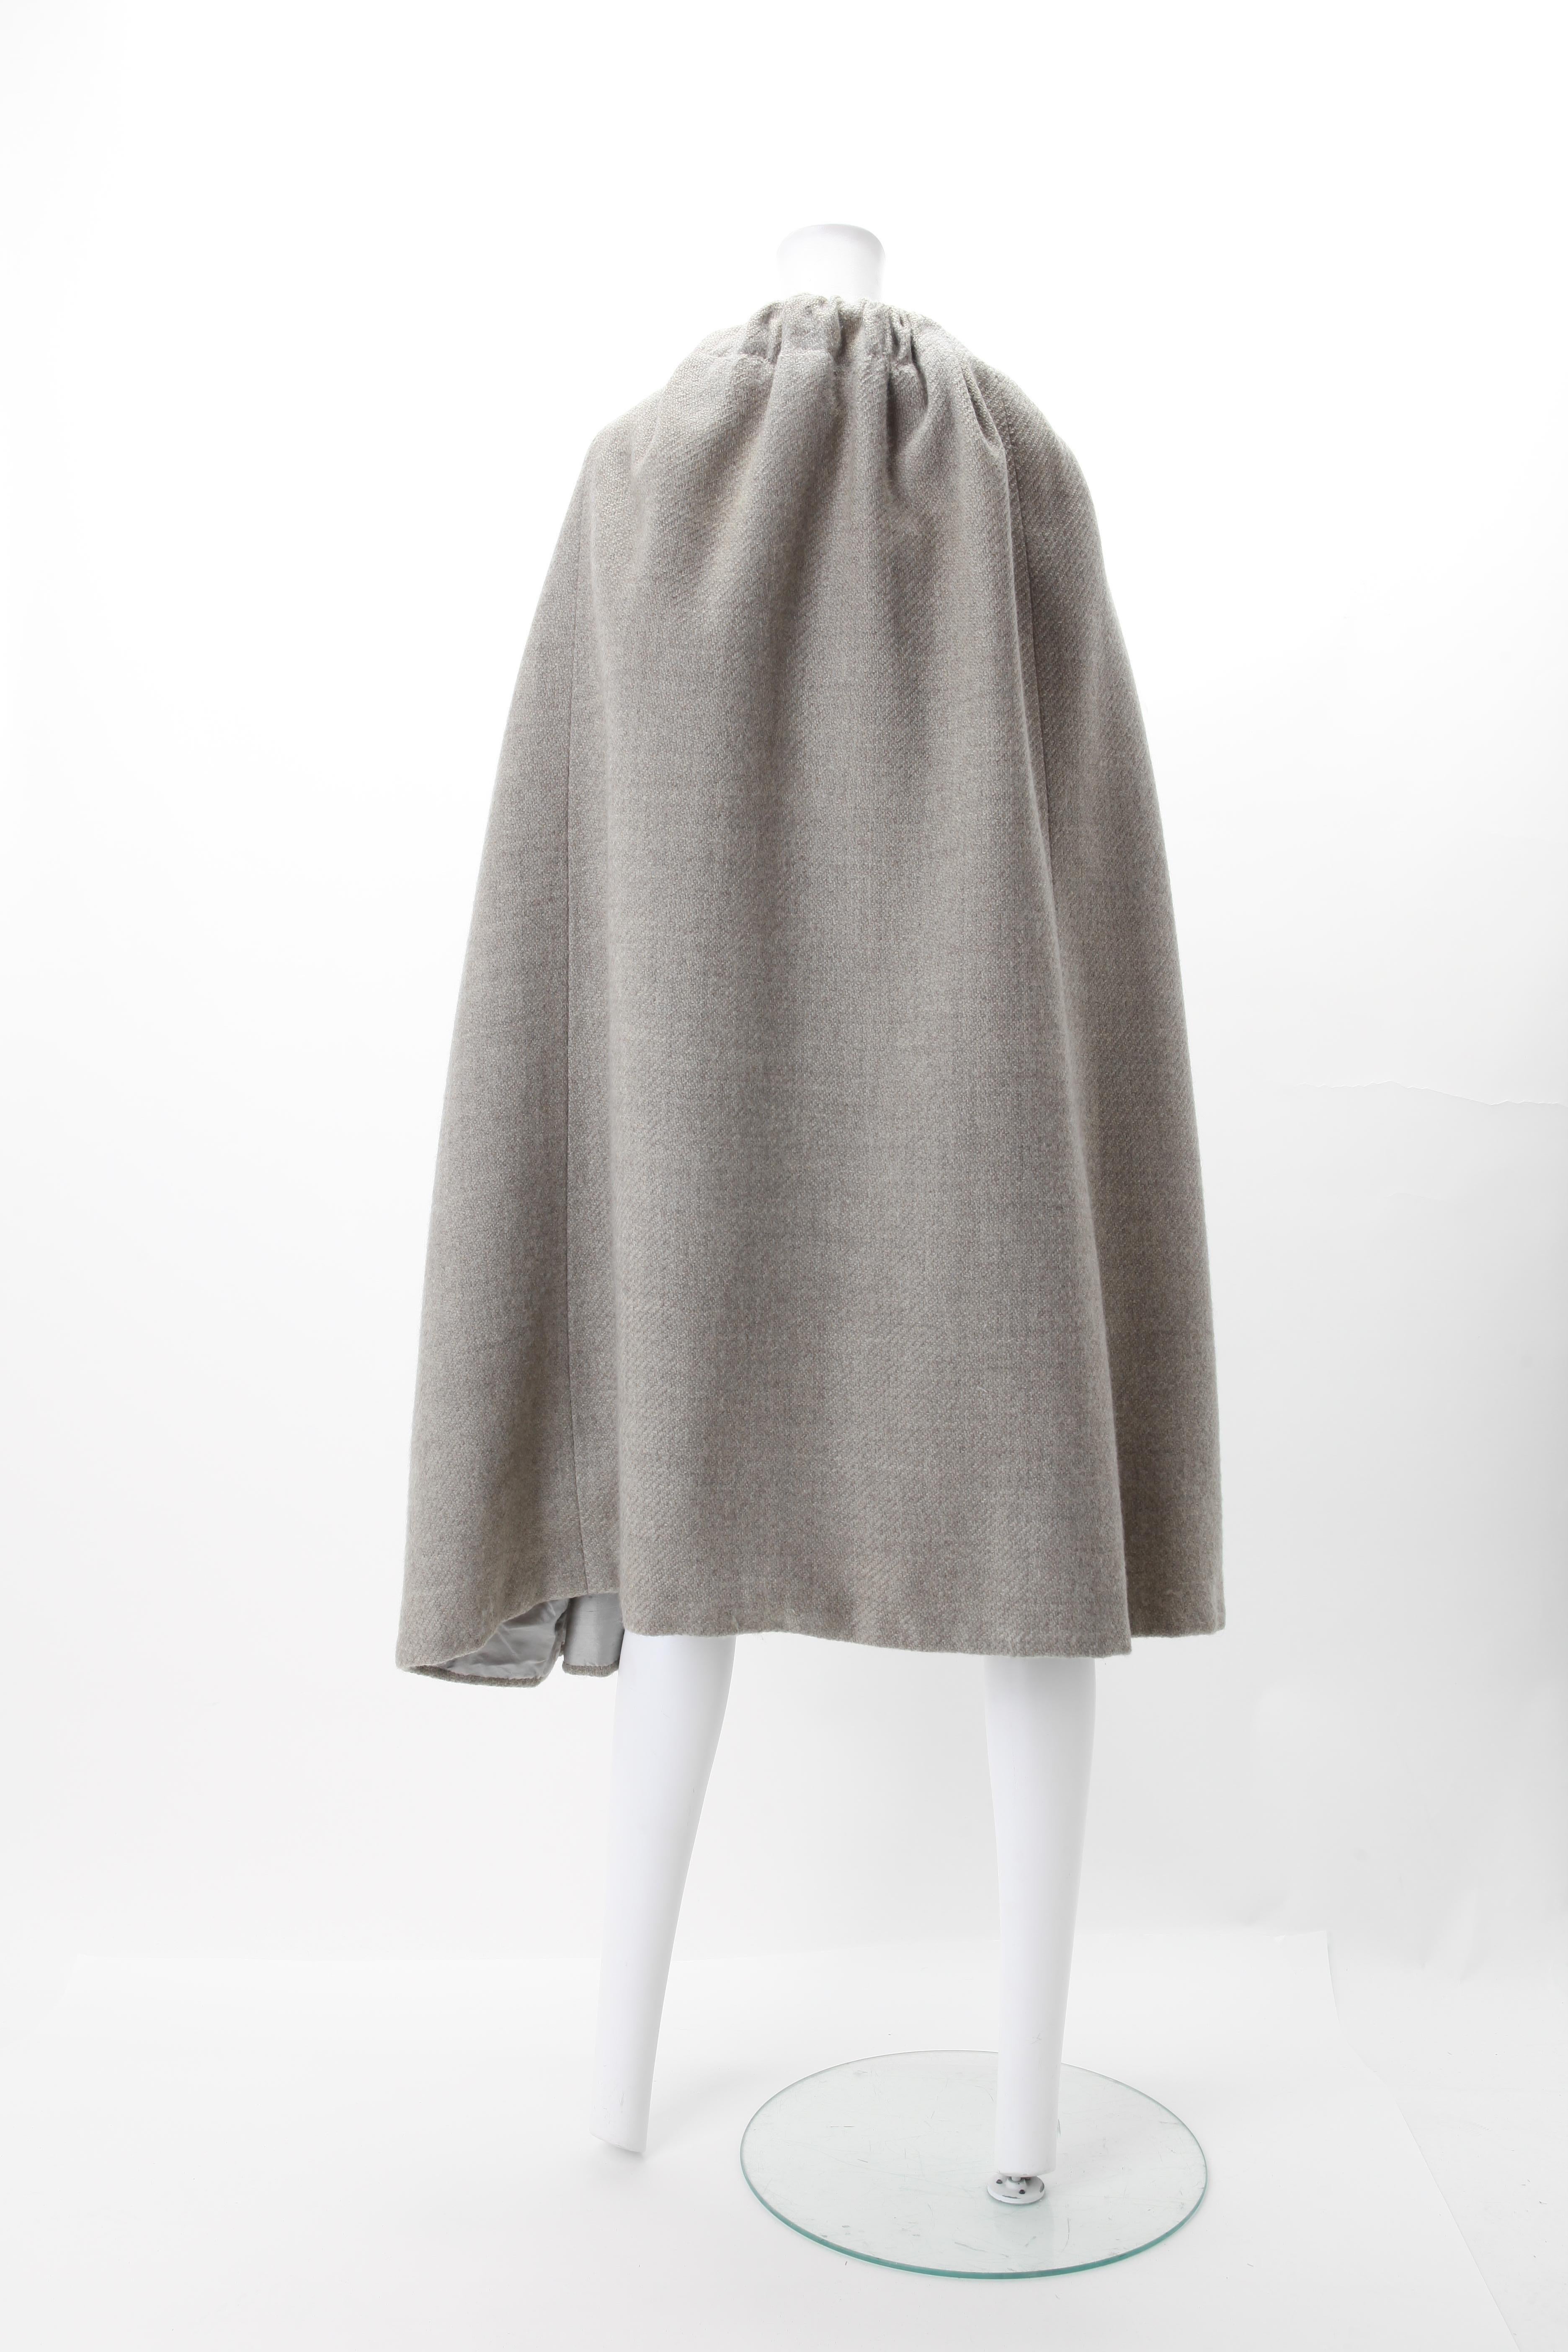 Balenciaga Couture Umhang aus Wollstrick, um 1970
1970er Jahre nummeriert 